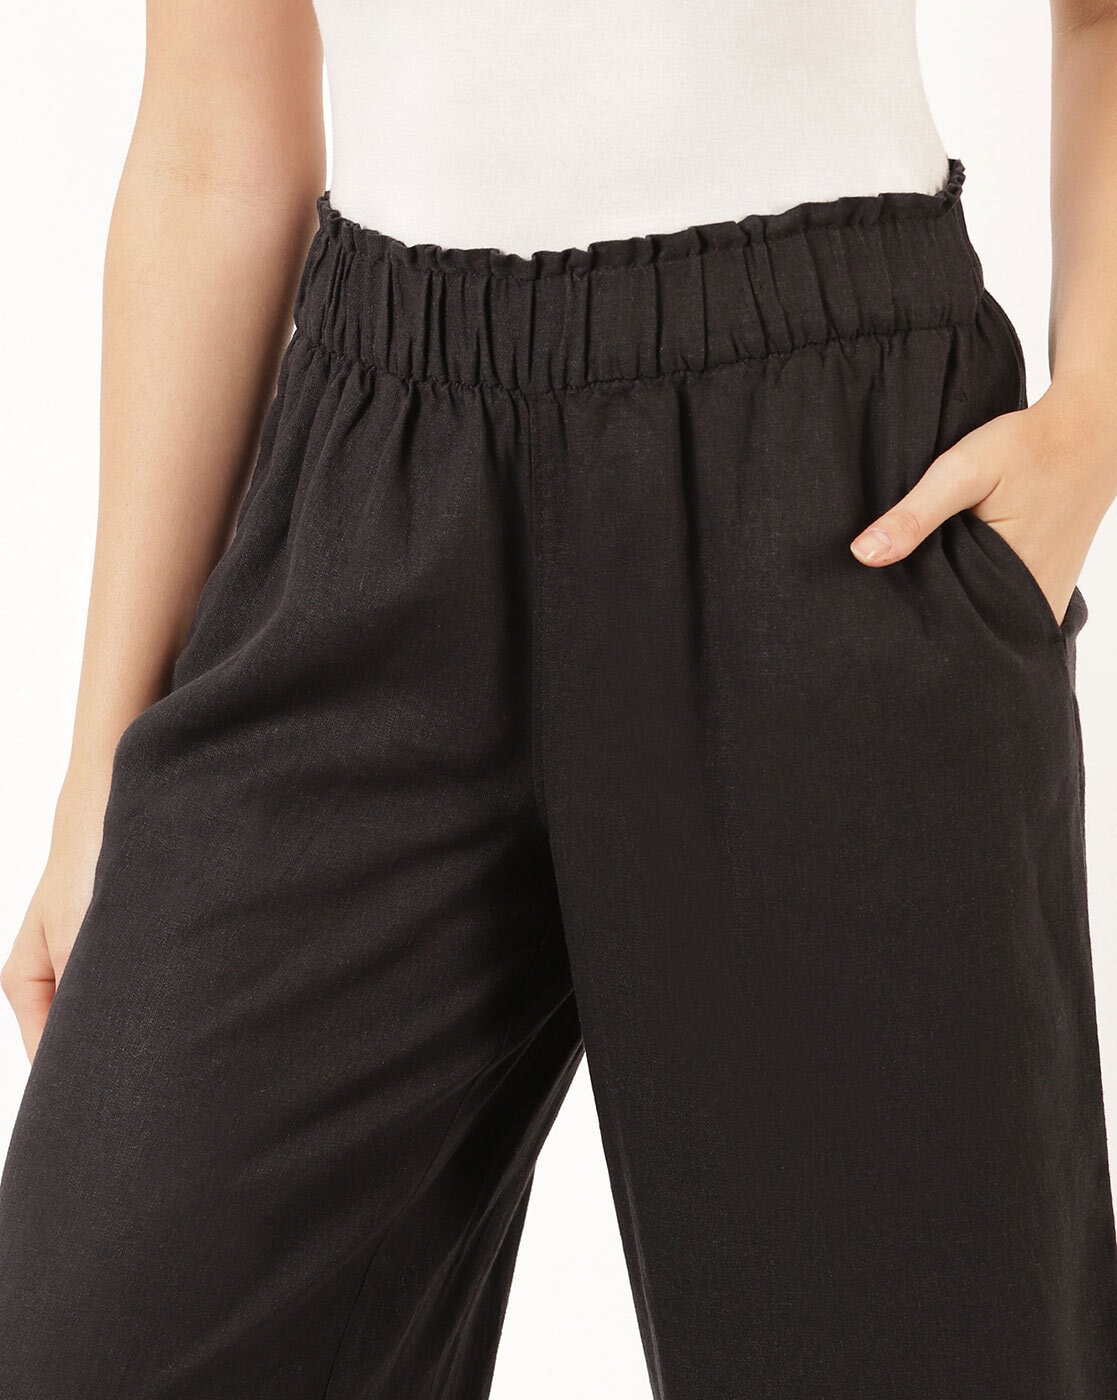 Wide leg super-soft trousers black - Black - Monki